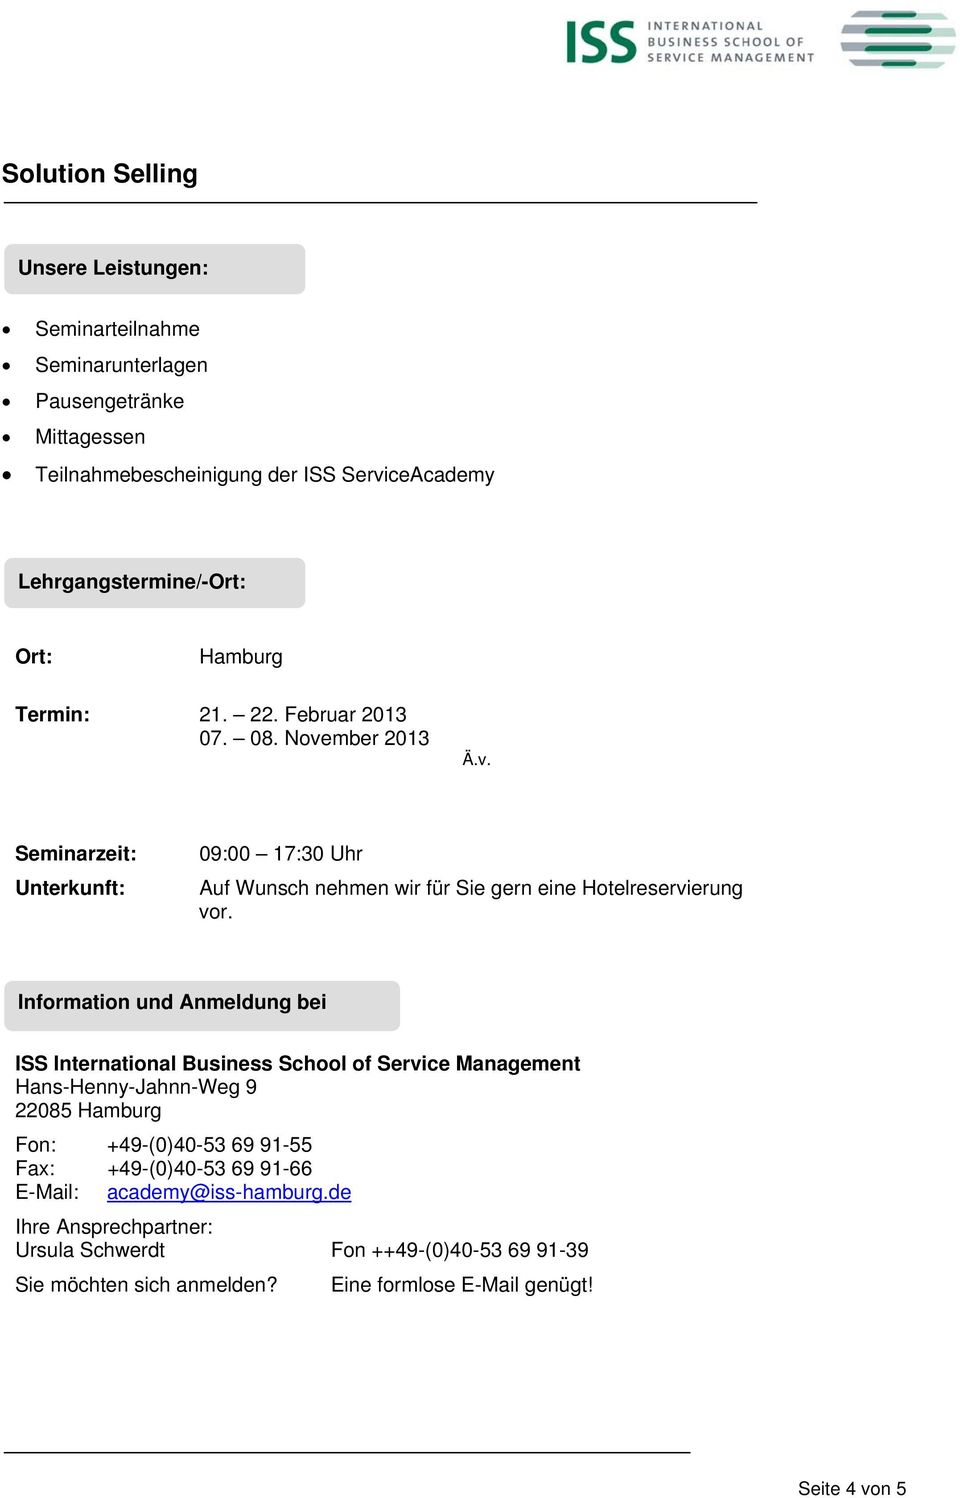 Information und Anmeldung bei ISS International Business School of Service Management Hans-Henny-Jahnn-Weg 9 22085 Hamburg Fon: +49-(0)40-53 69 91-55 Fax: